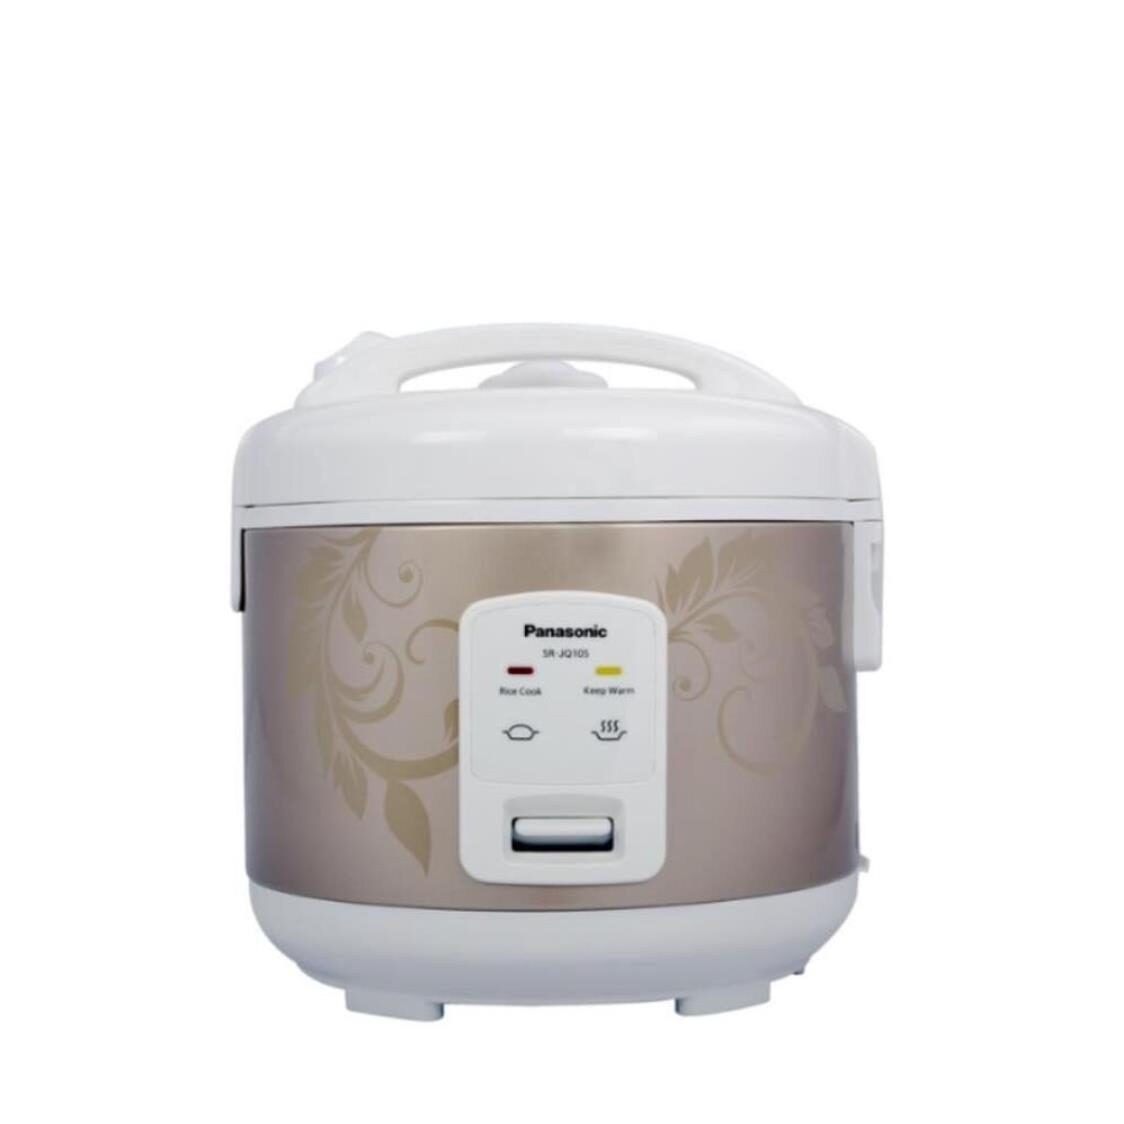 Panasonic Rice Cooker With 15min Quick Cook 10L SR-JQ105NSH